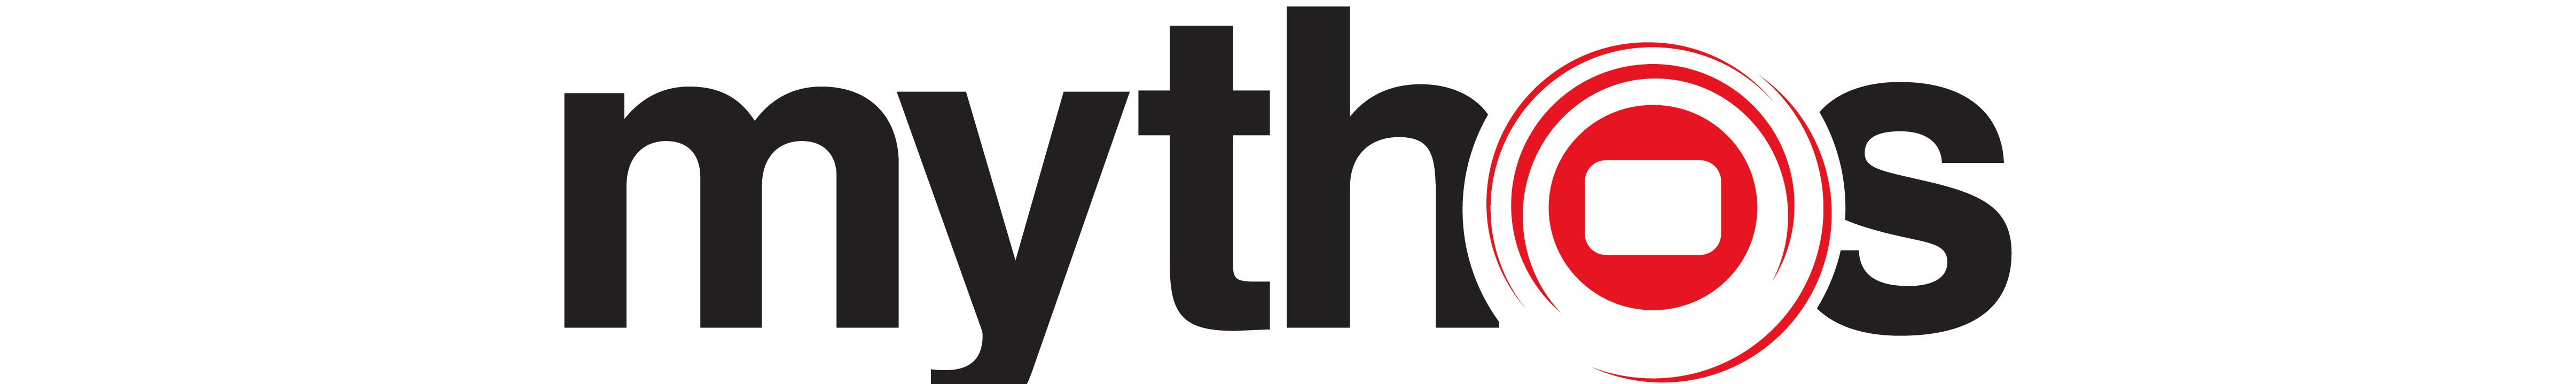 Estudio Mythos's profile banner